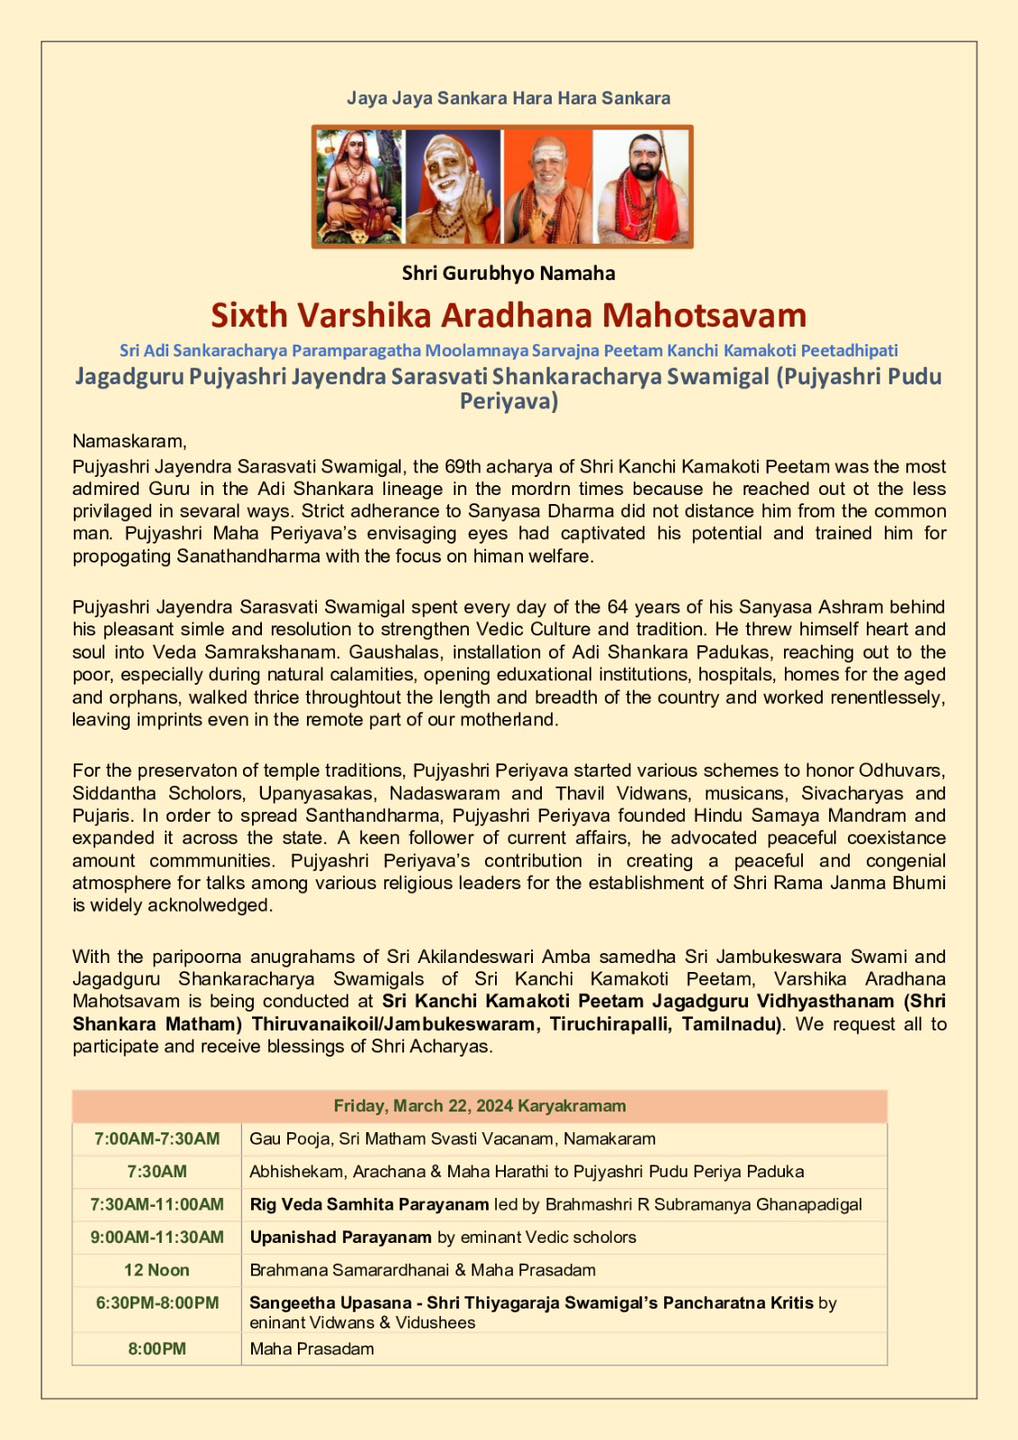 Sixth Varshika Aradhana Mahotsavam of Pujya Jayendra Saraswathi Swamigal to be observed at Tiruvanaikovil